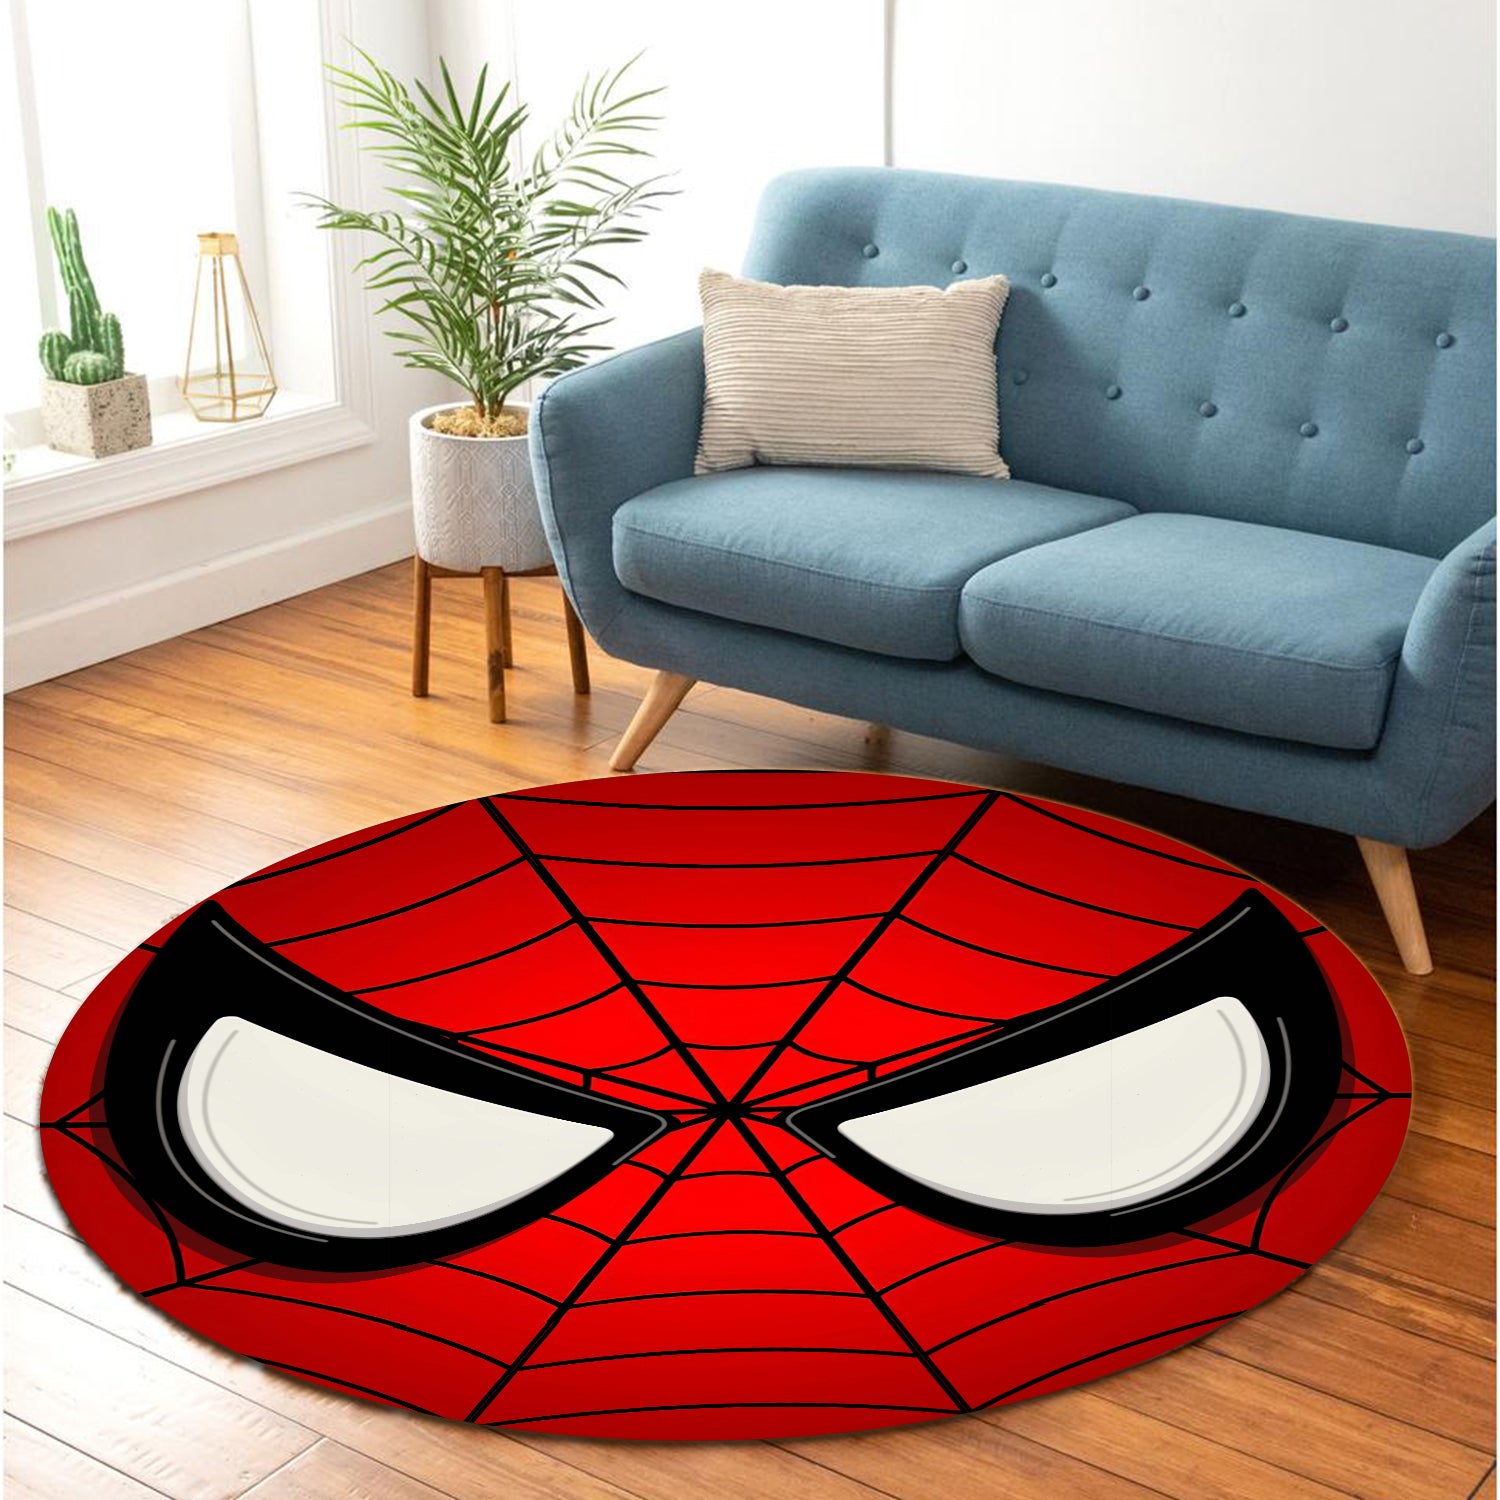 Spiderman Eyes Round Carpet Rug Bedroom Livingroom Home Decor Nearkii